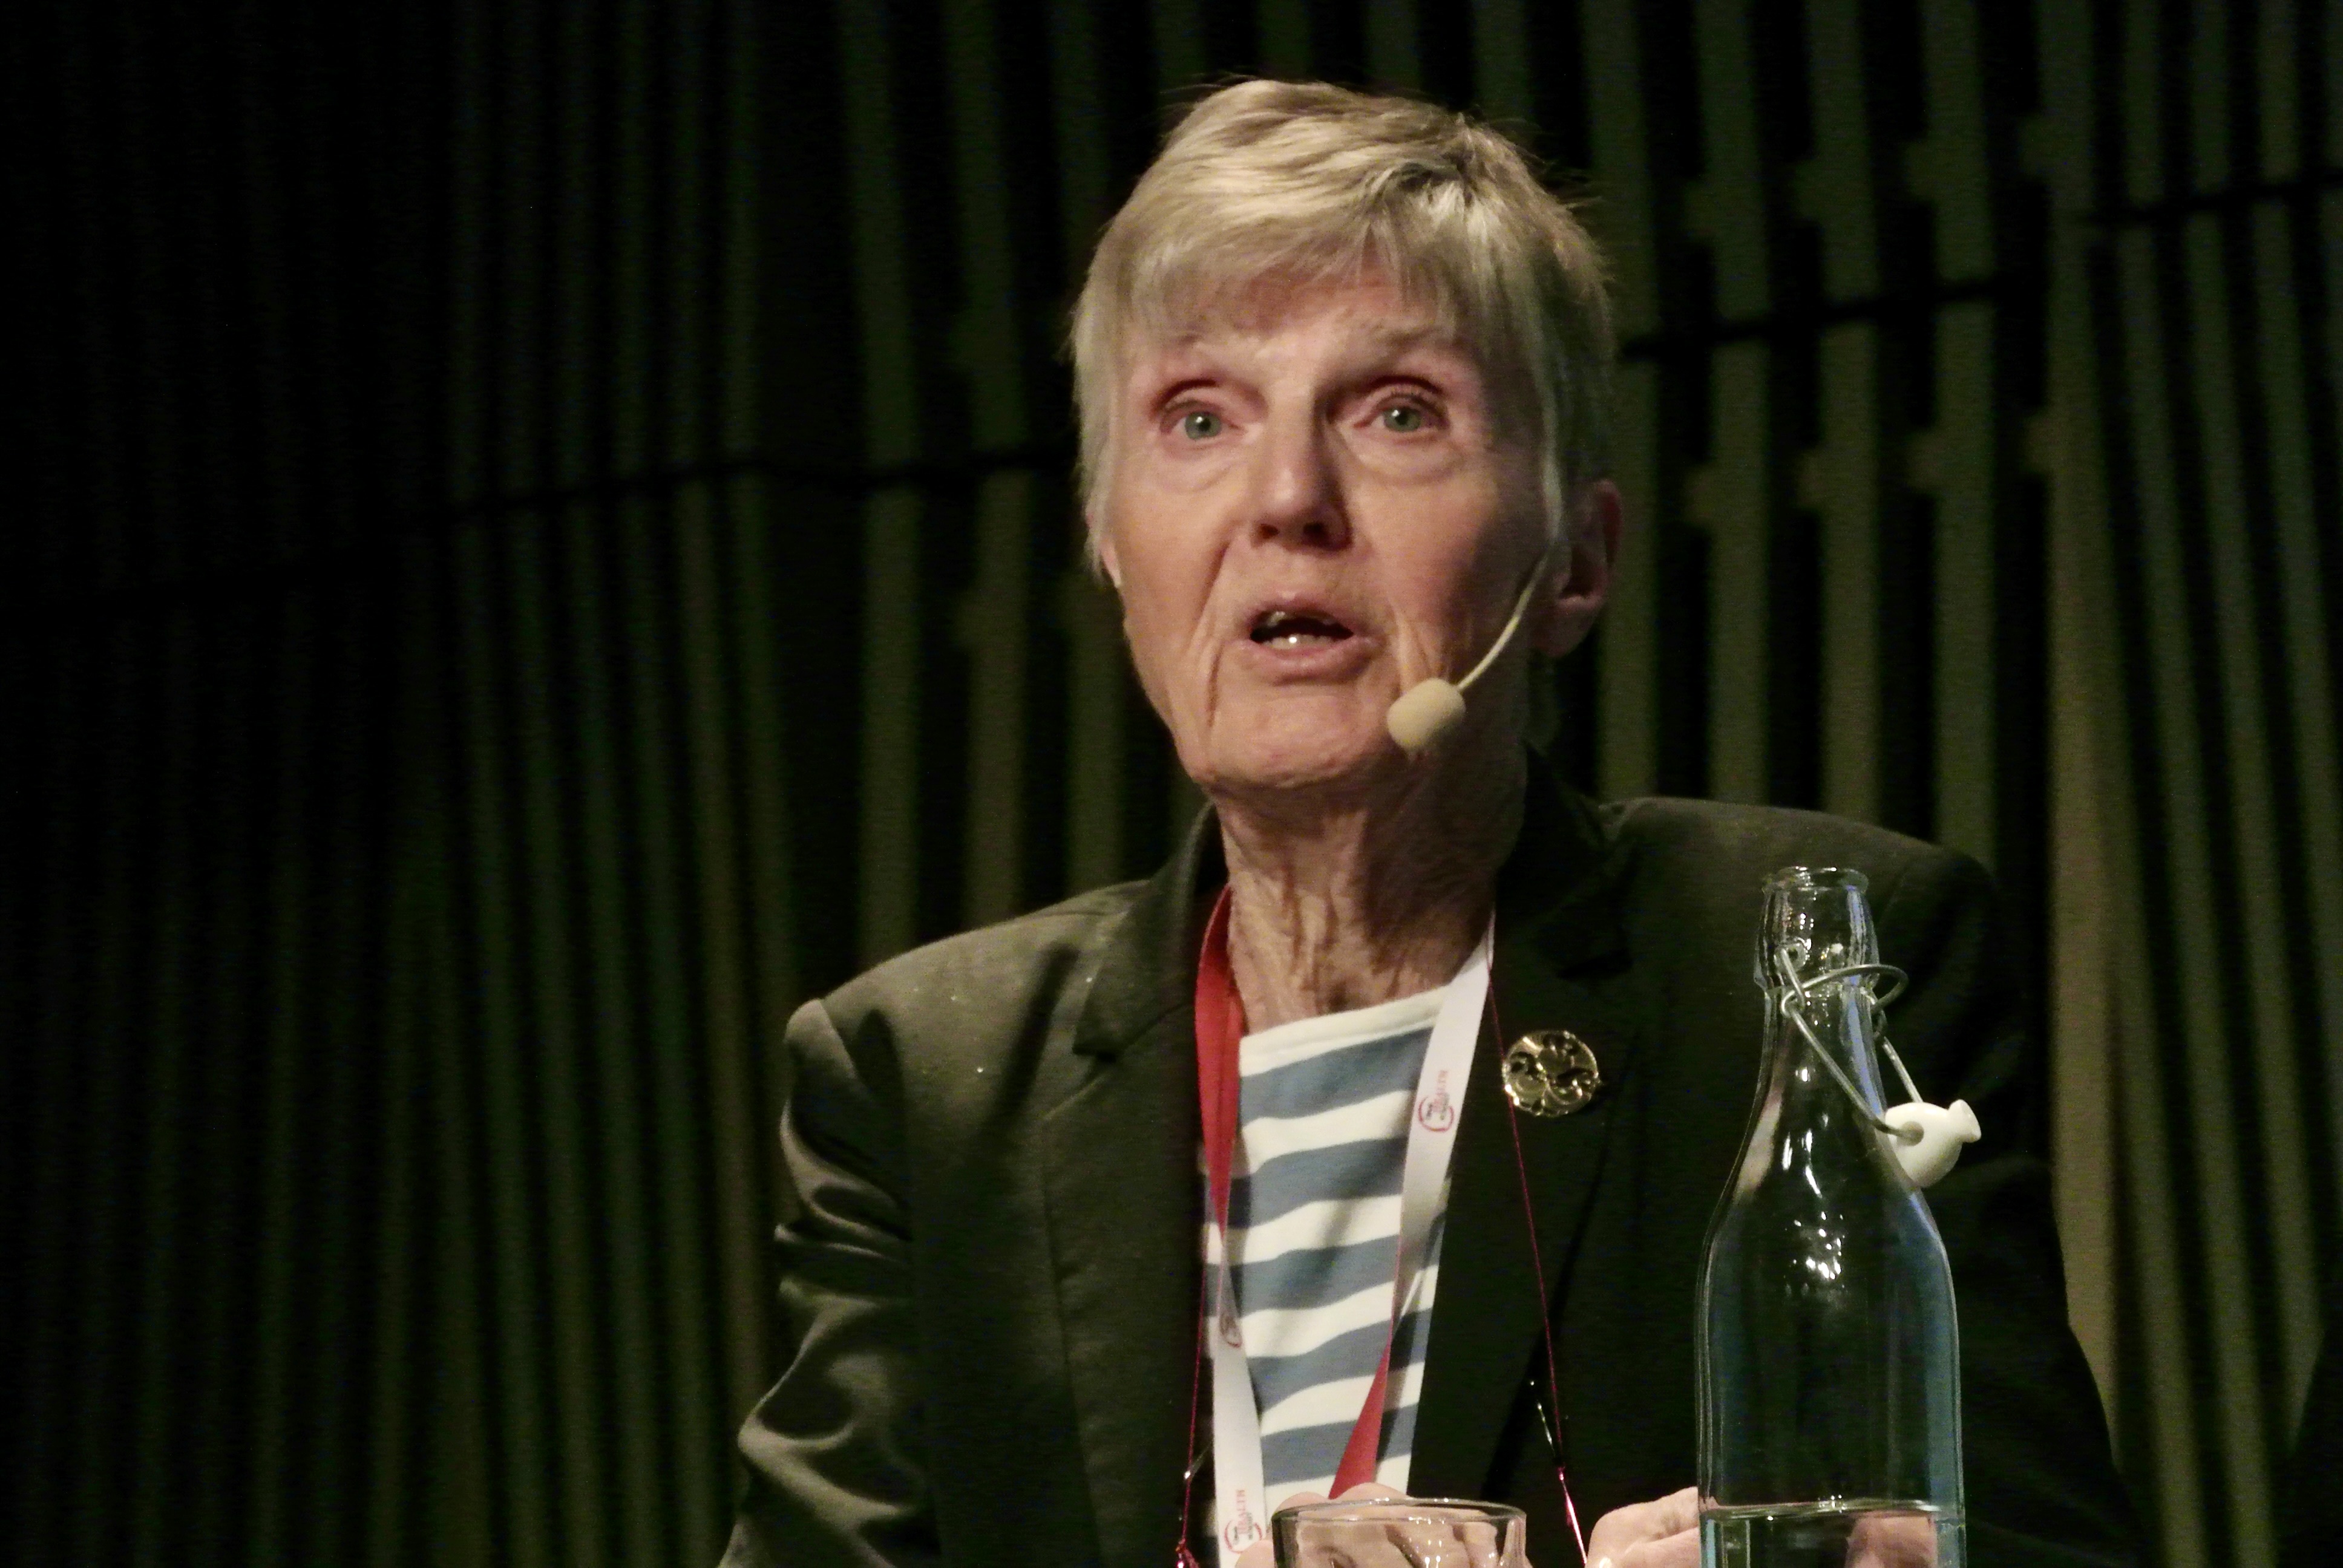 Barbro Westerholm presents at the Uppsala Health Summit in 2014